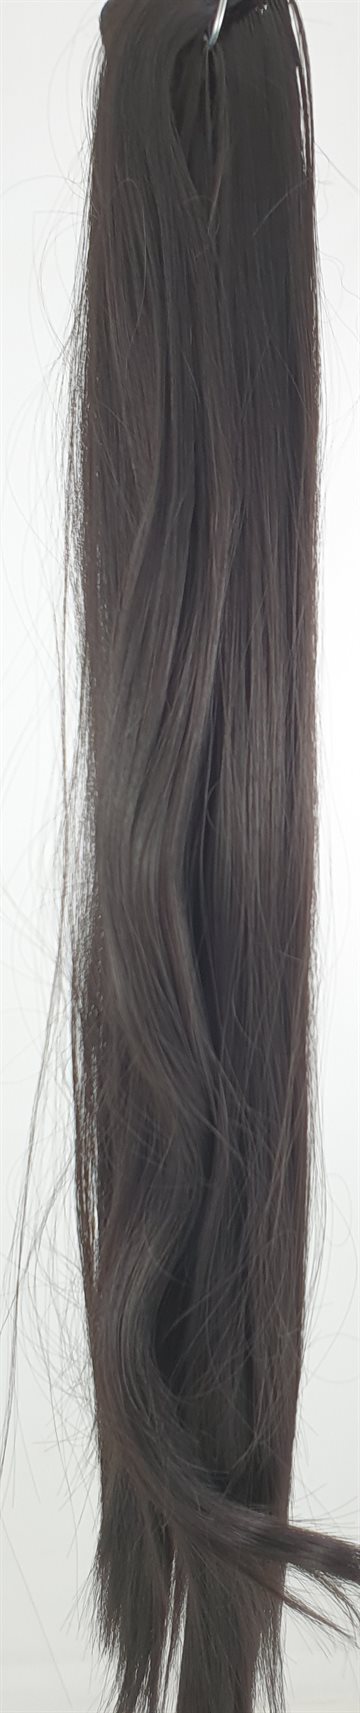 Hair Syntietic Ponytail Straight 24" - 60 Cm Long 130 g. Colour 1B Black.